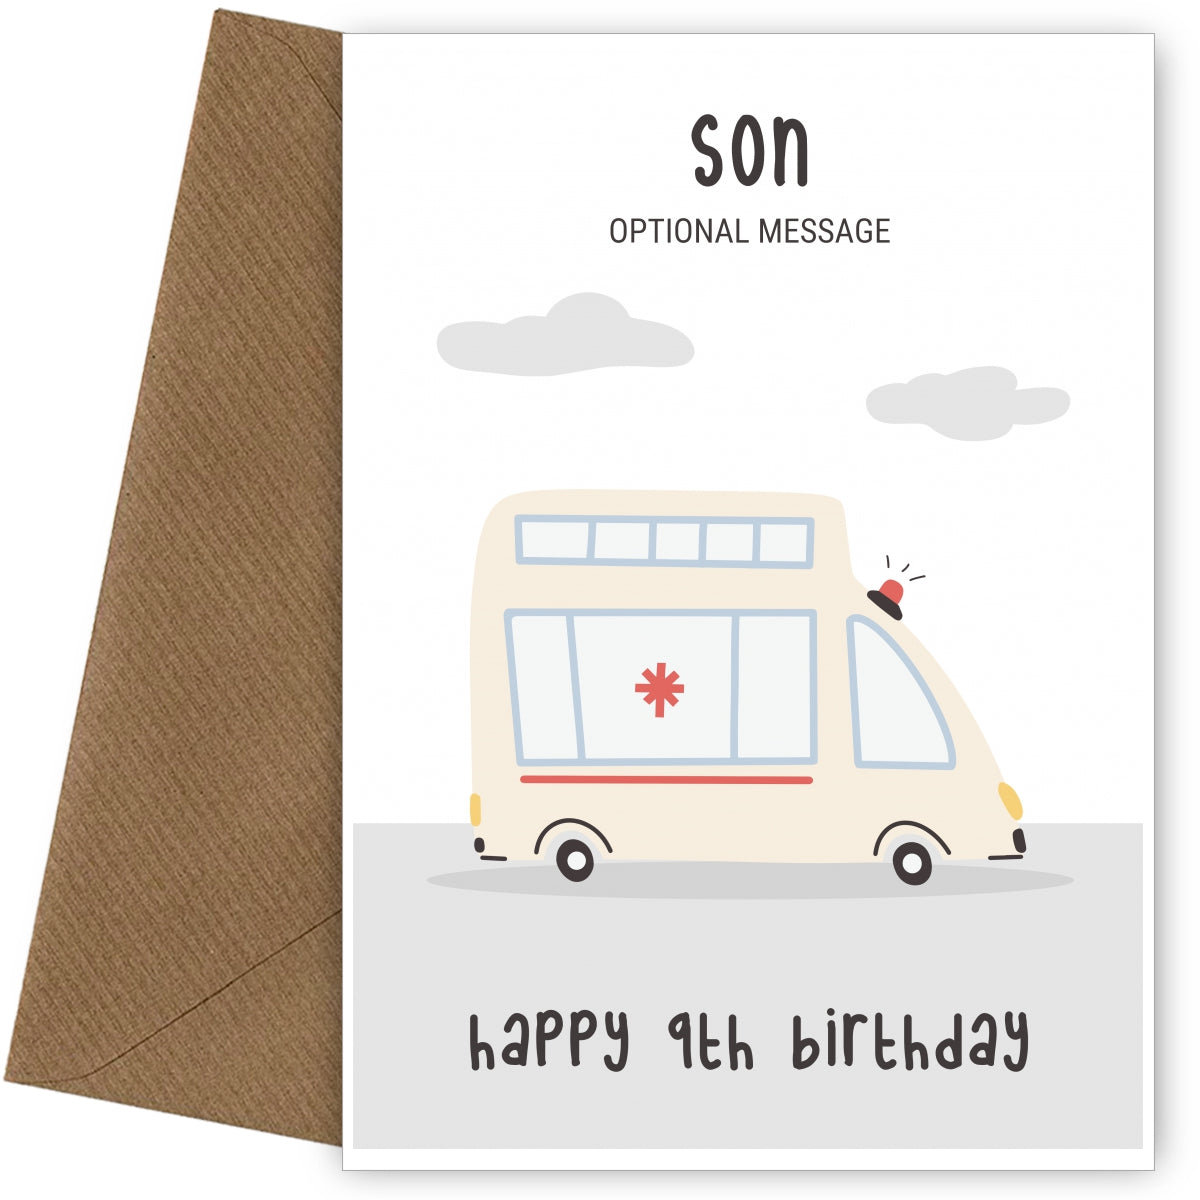 Fun Vehicles 9th Birthday Card for Son - Ambulance